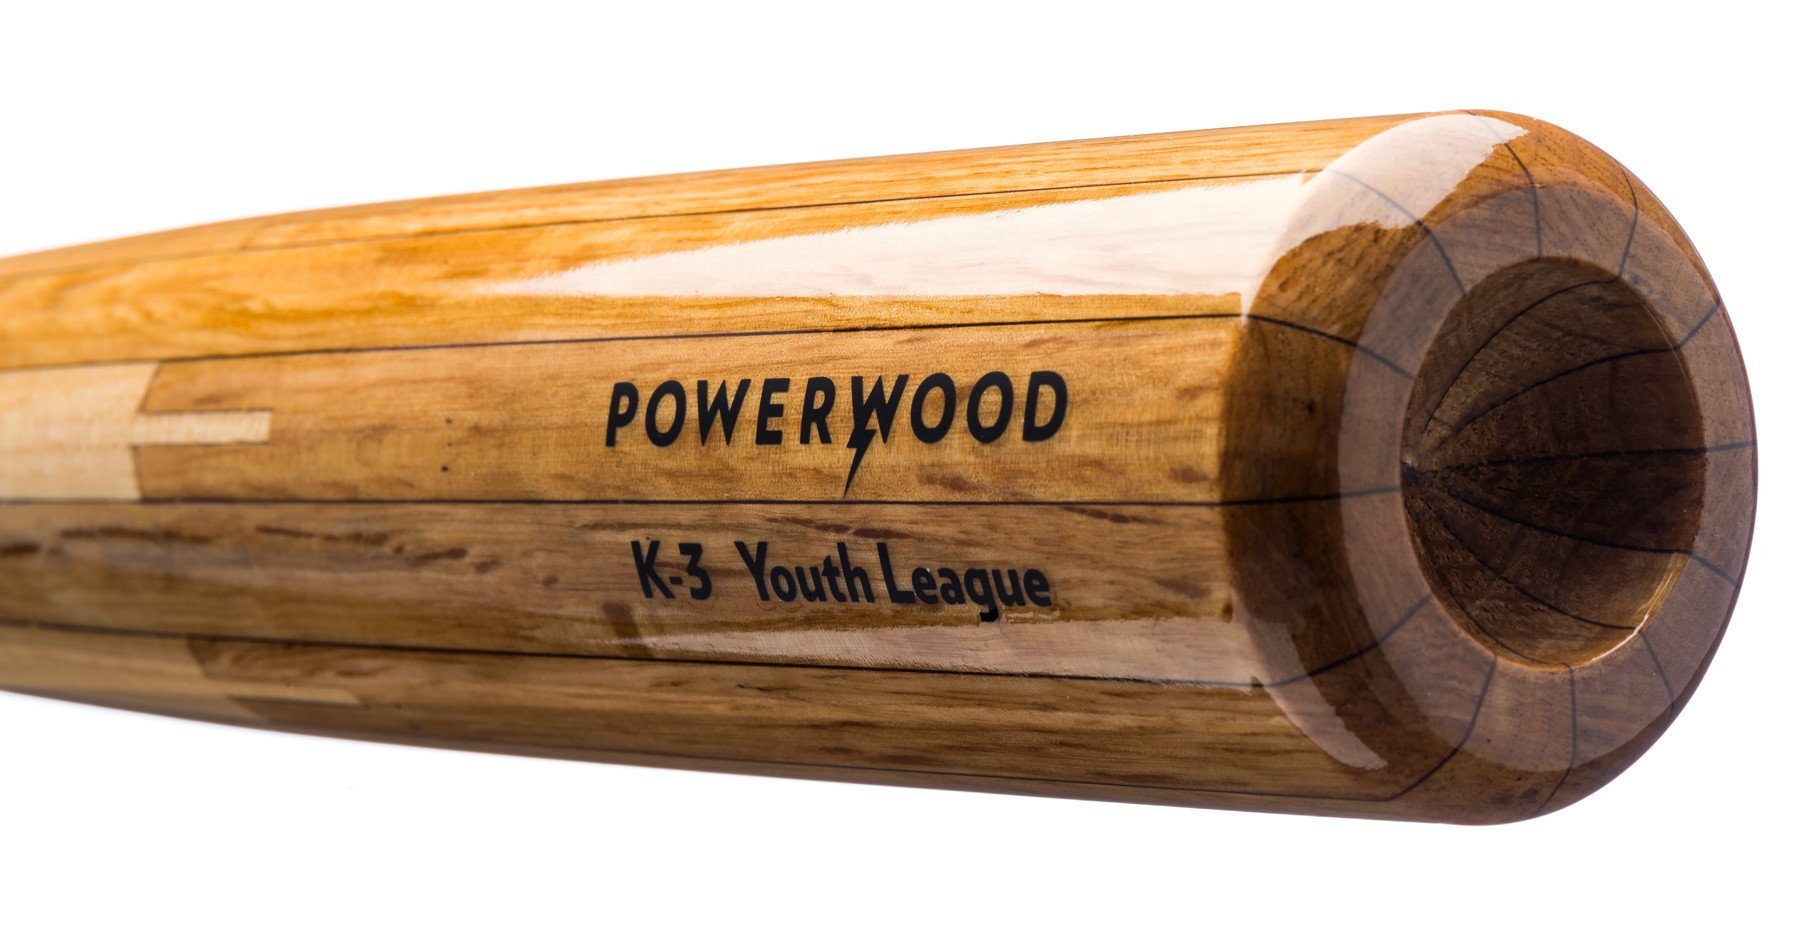 Powerwood K-3 Youth Wood Bats - MacDougall Bats